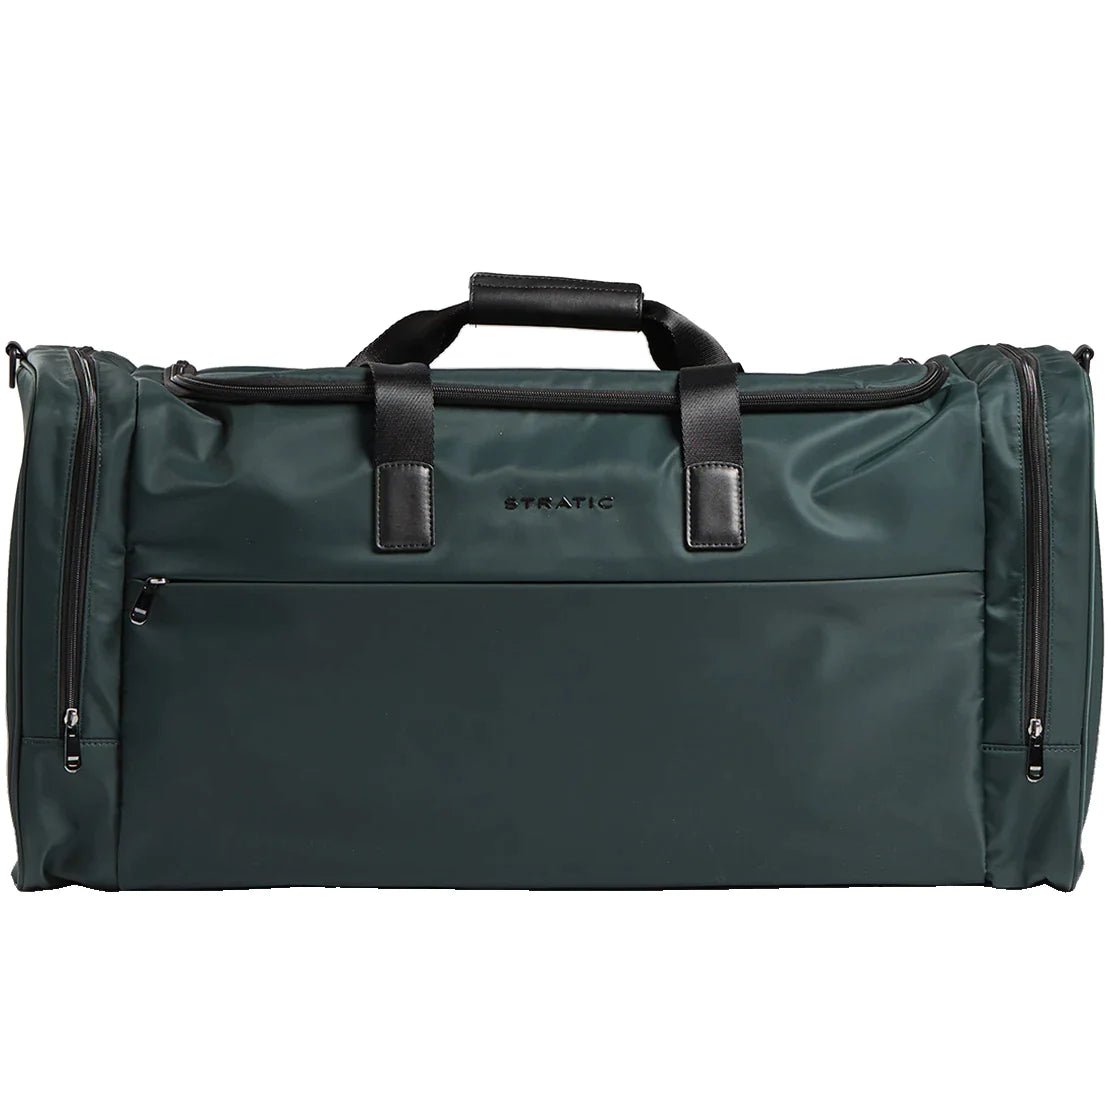 Stratic Pure Travel Bag L 71 cm - Black